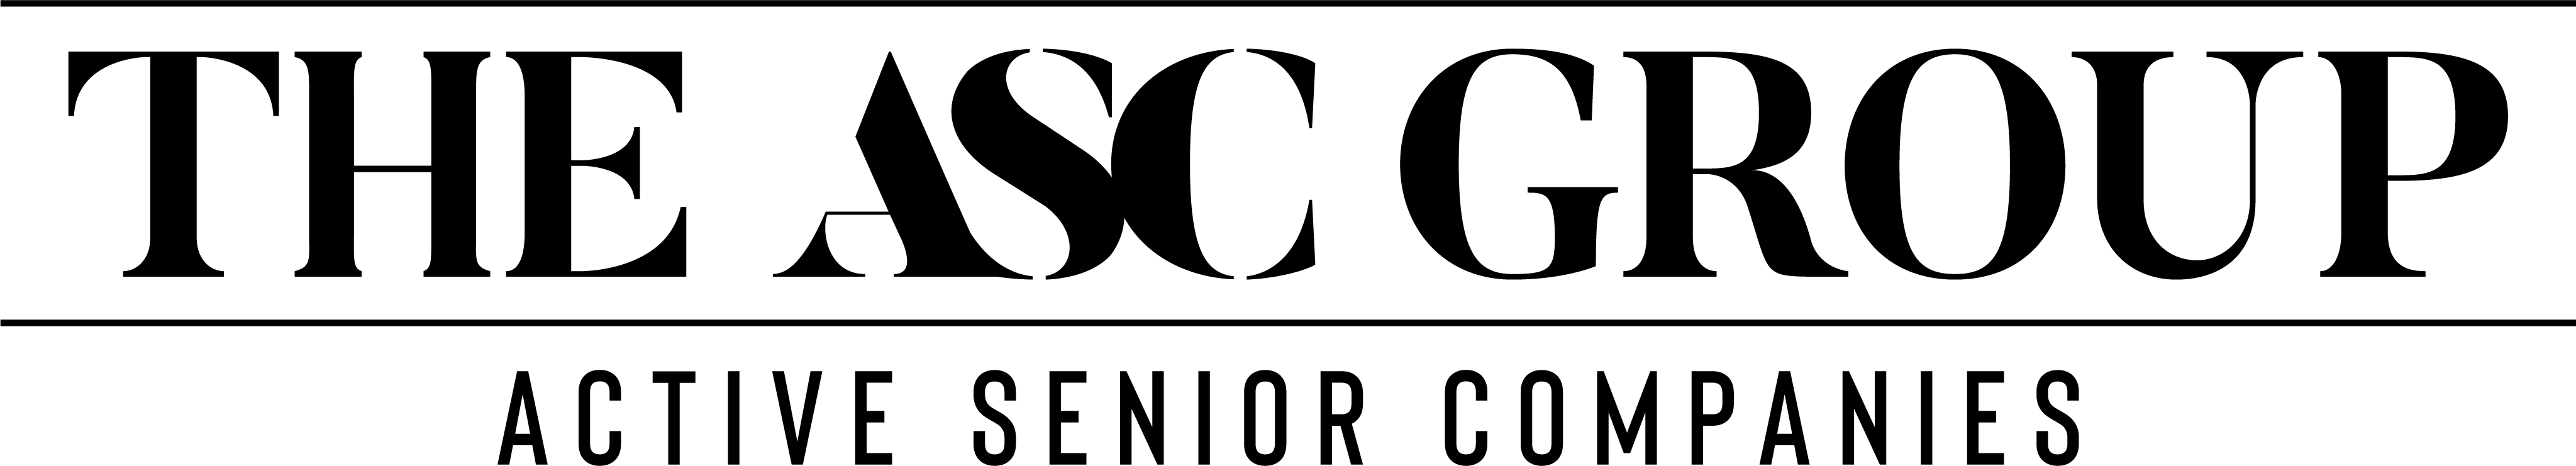 ASCG-logo_black